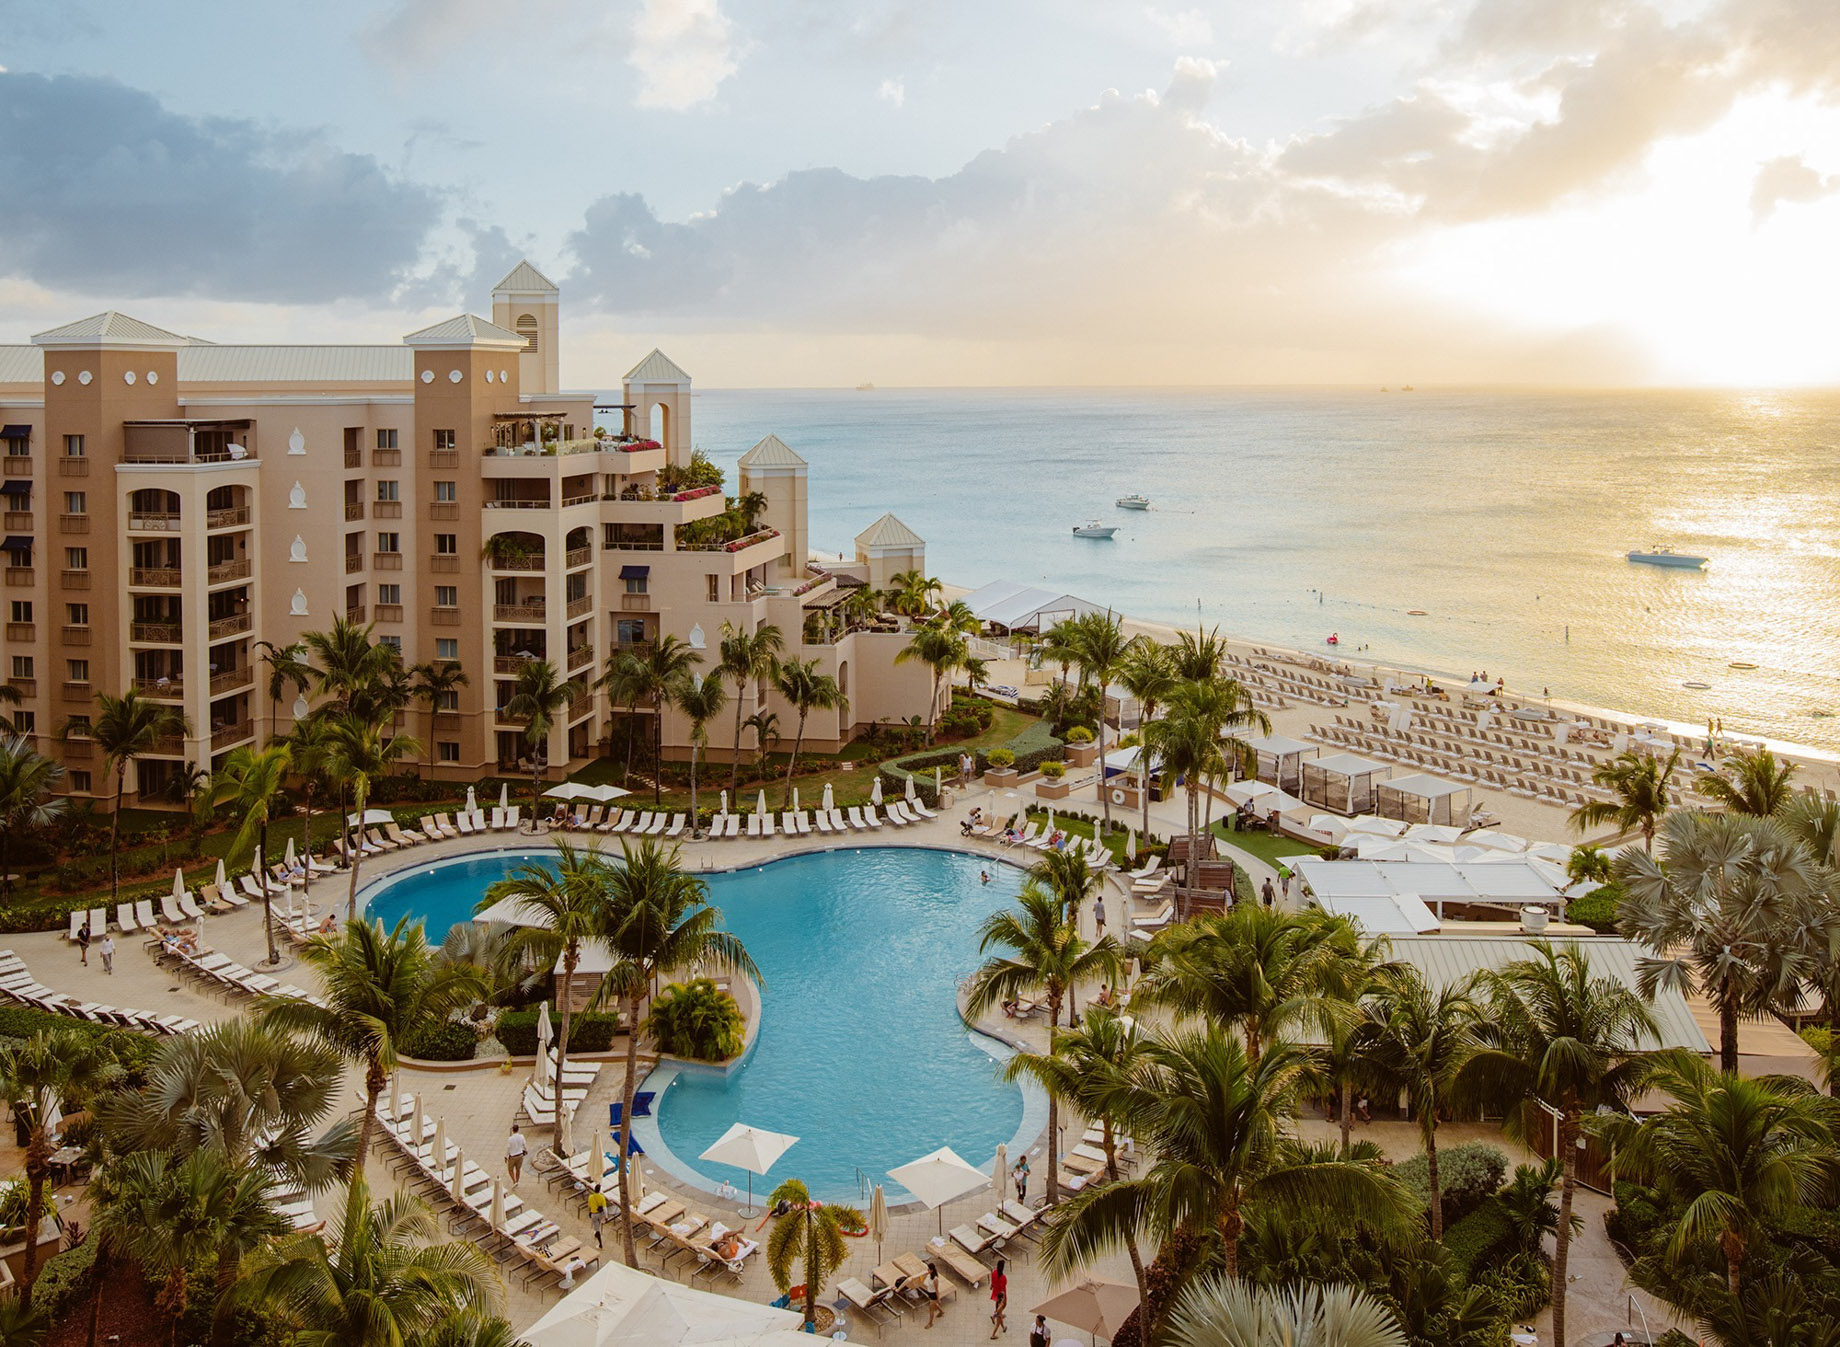 The Ritz-Carlton, Grand Cayman Resort - Seven Mile Beach, Cayman Islands - Exterior Pool Aerial Ocean View Sunset